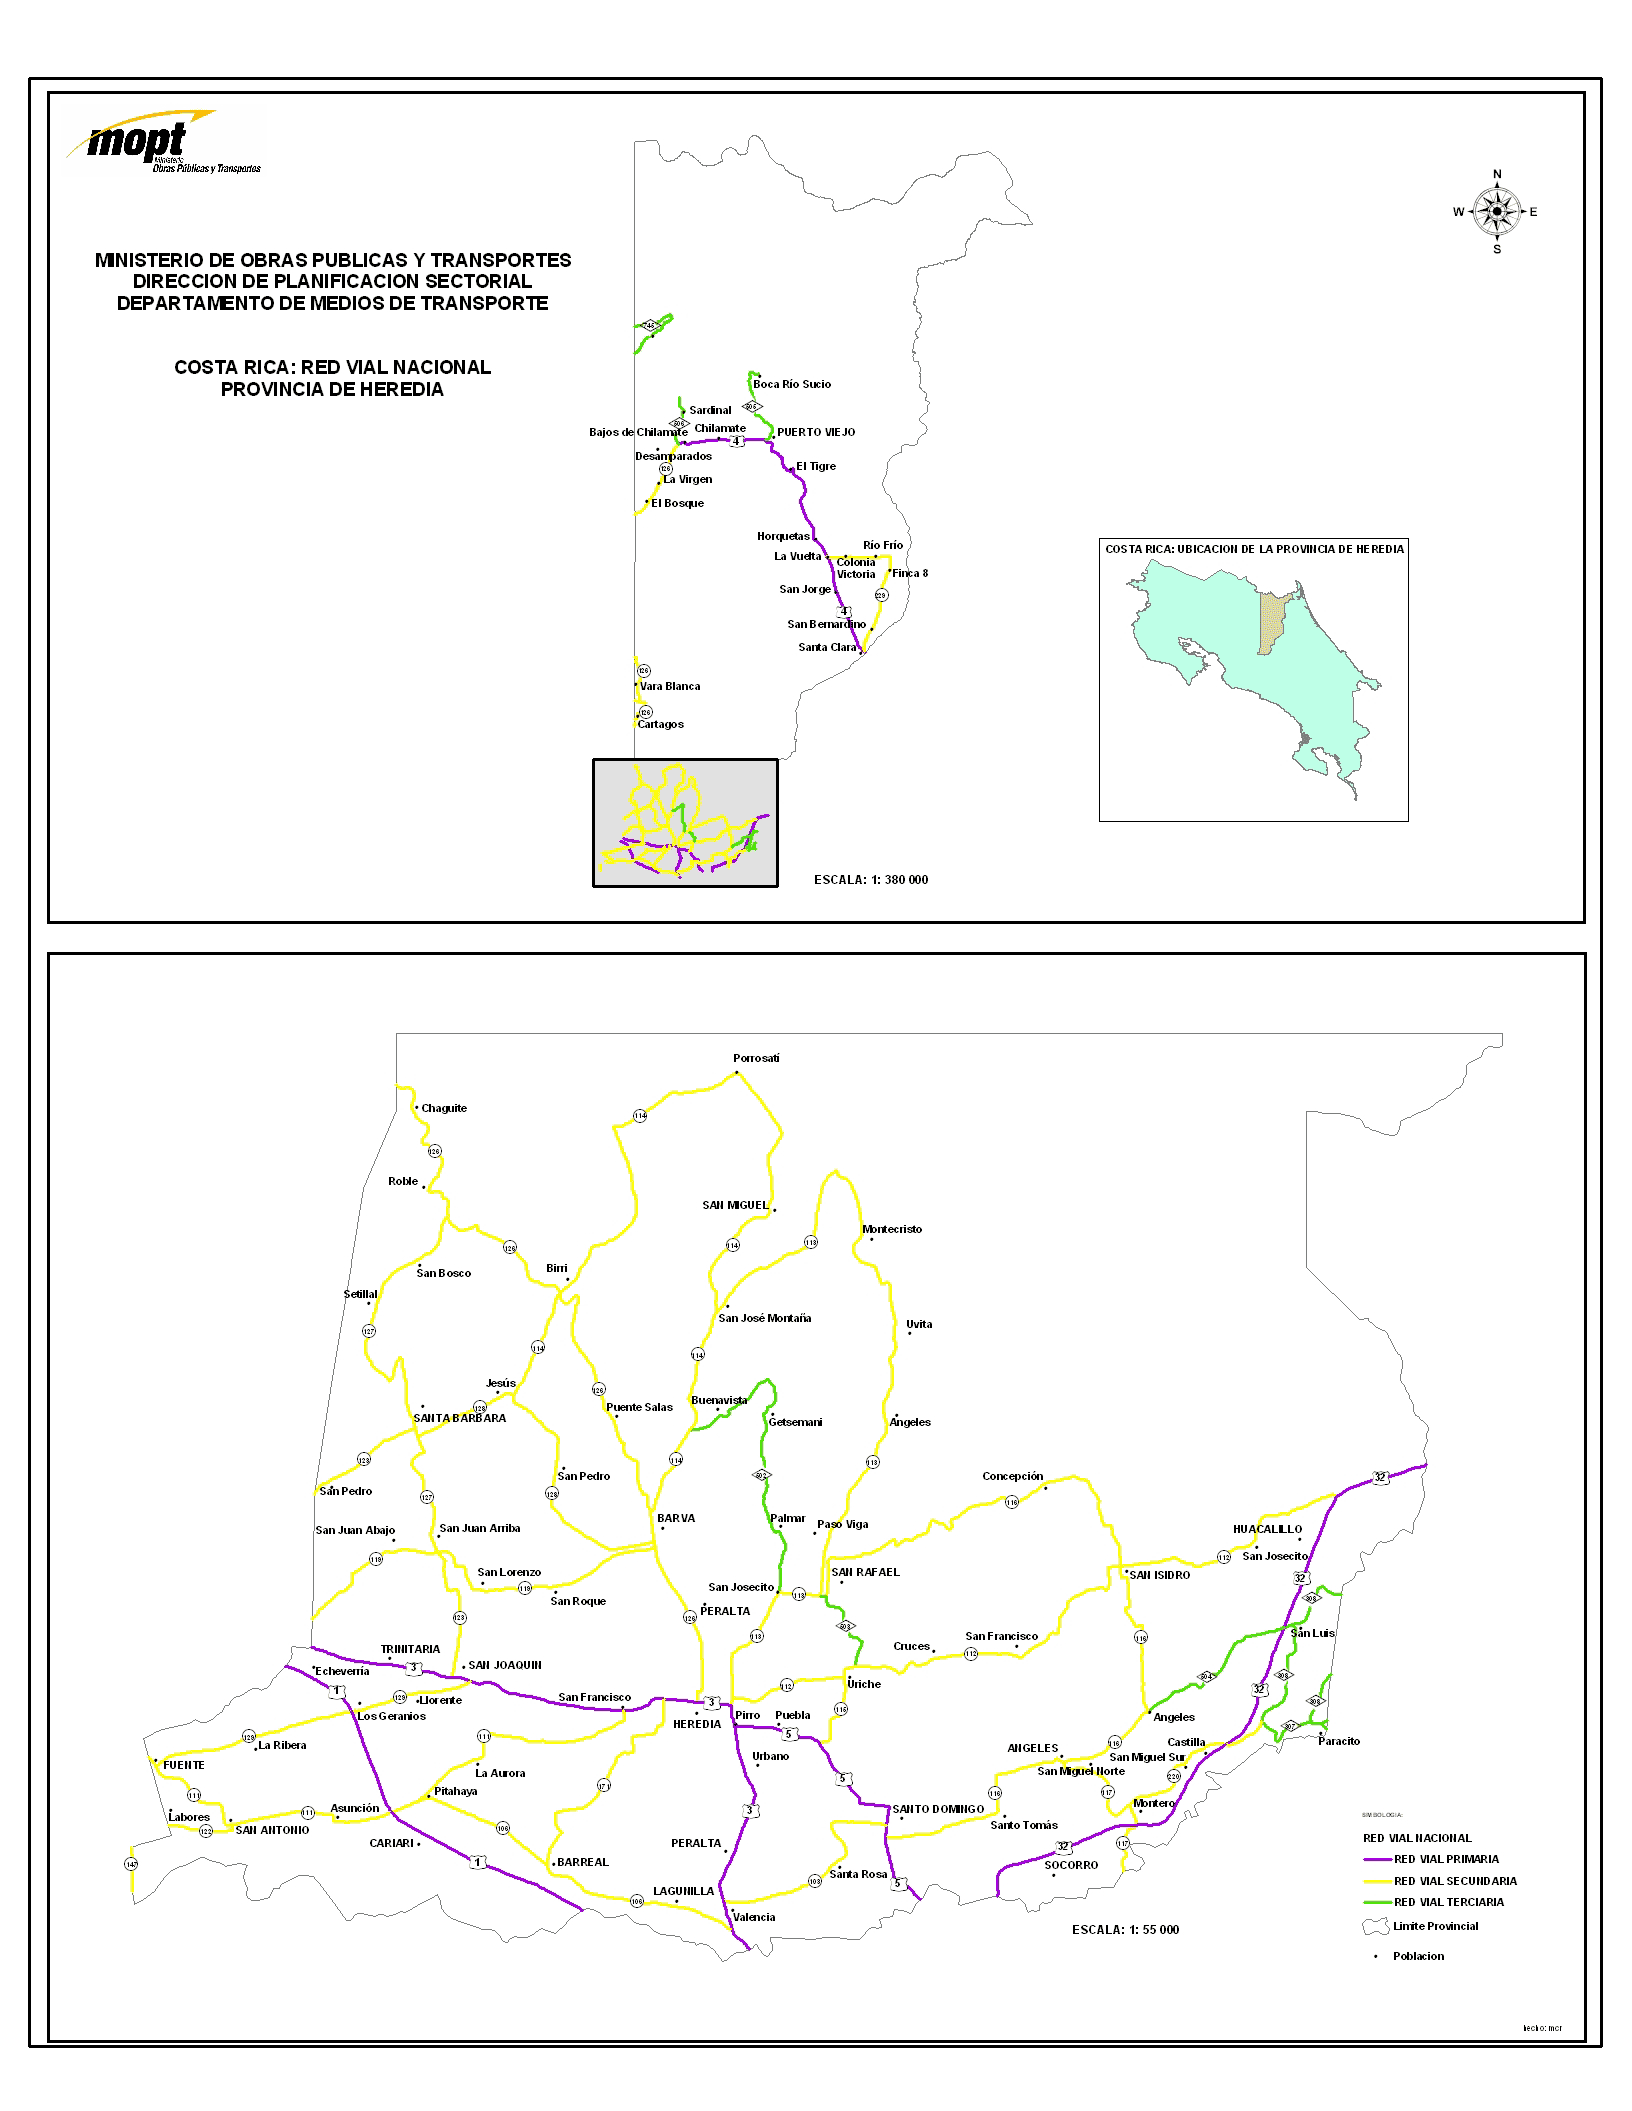 Heredia Province Road Network Map, Costa Rica